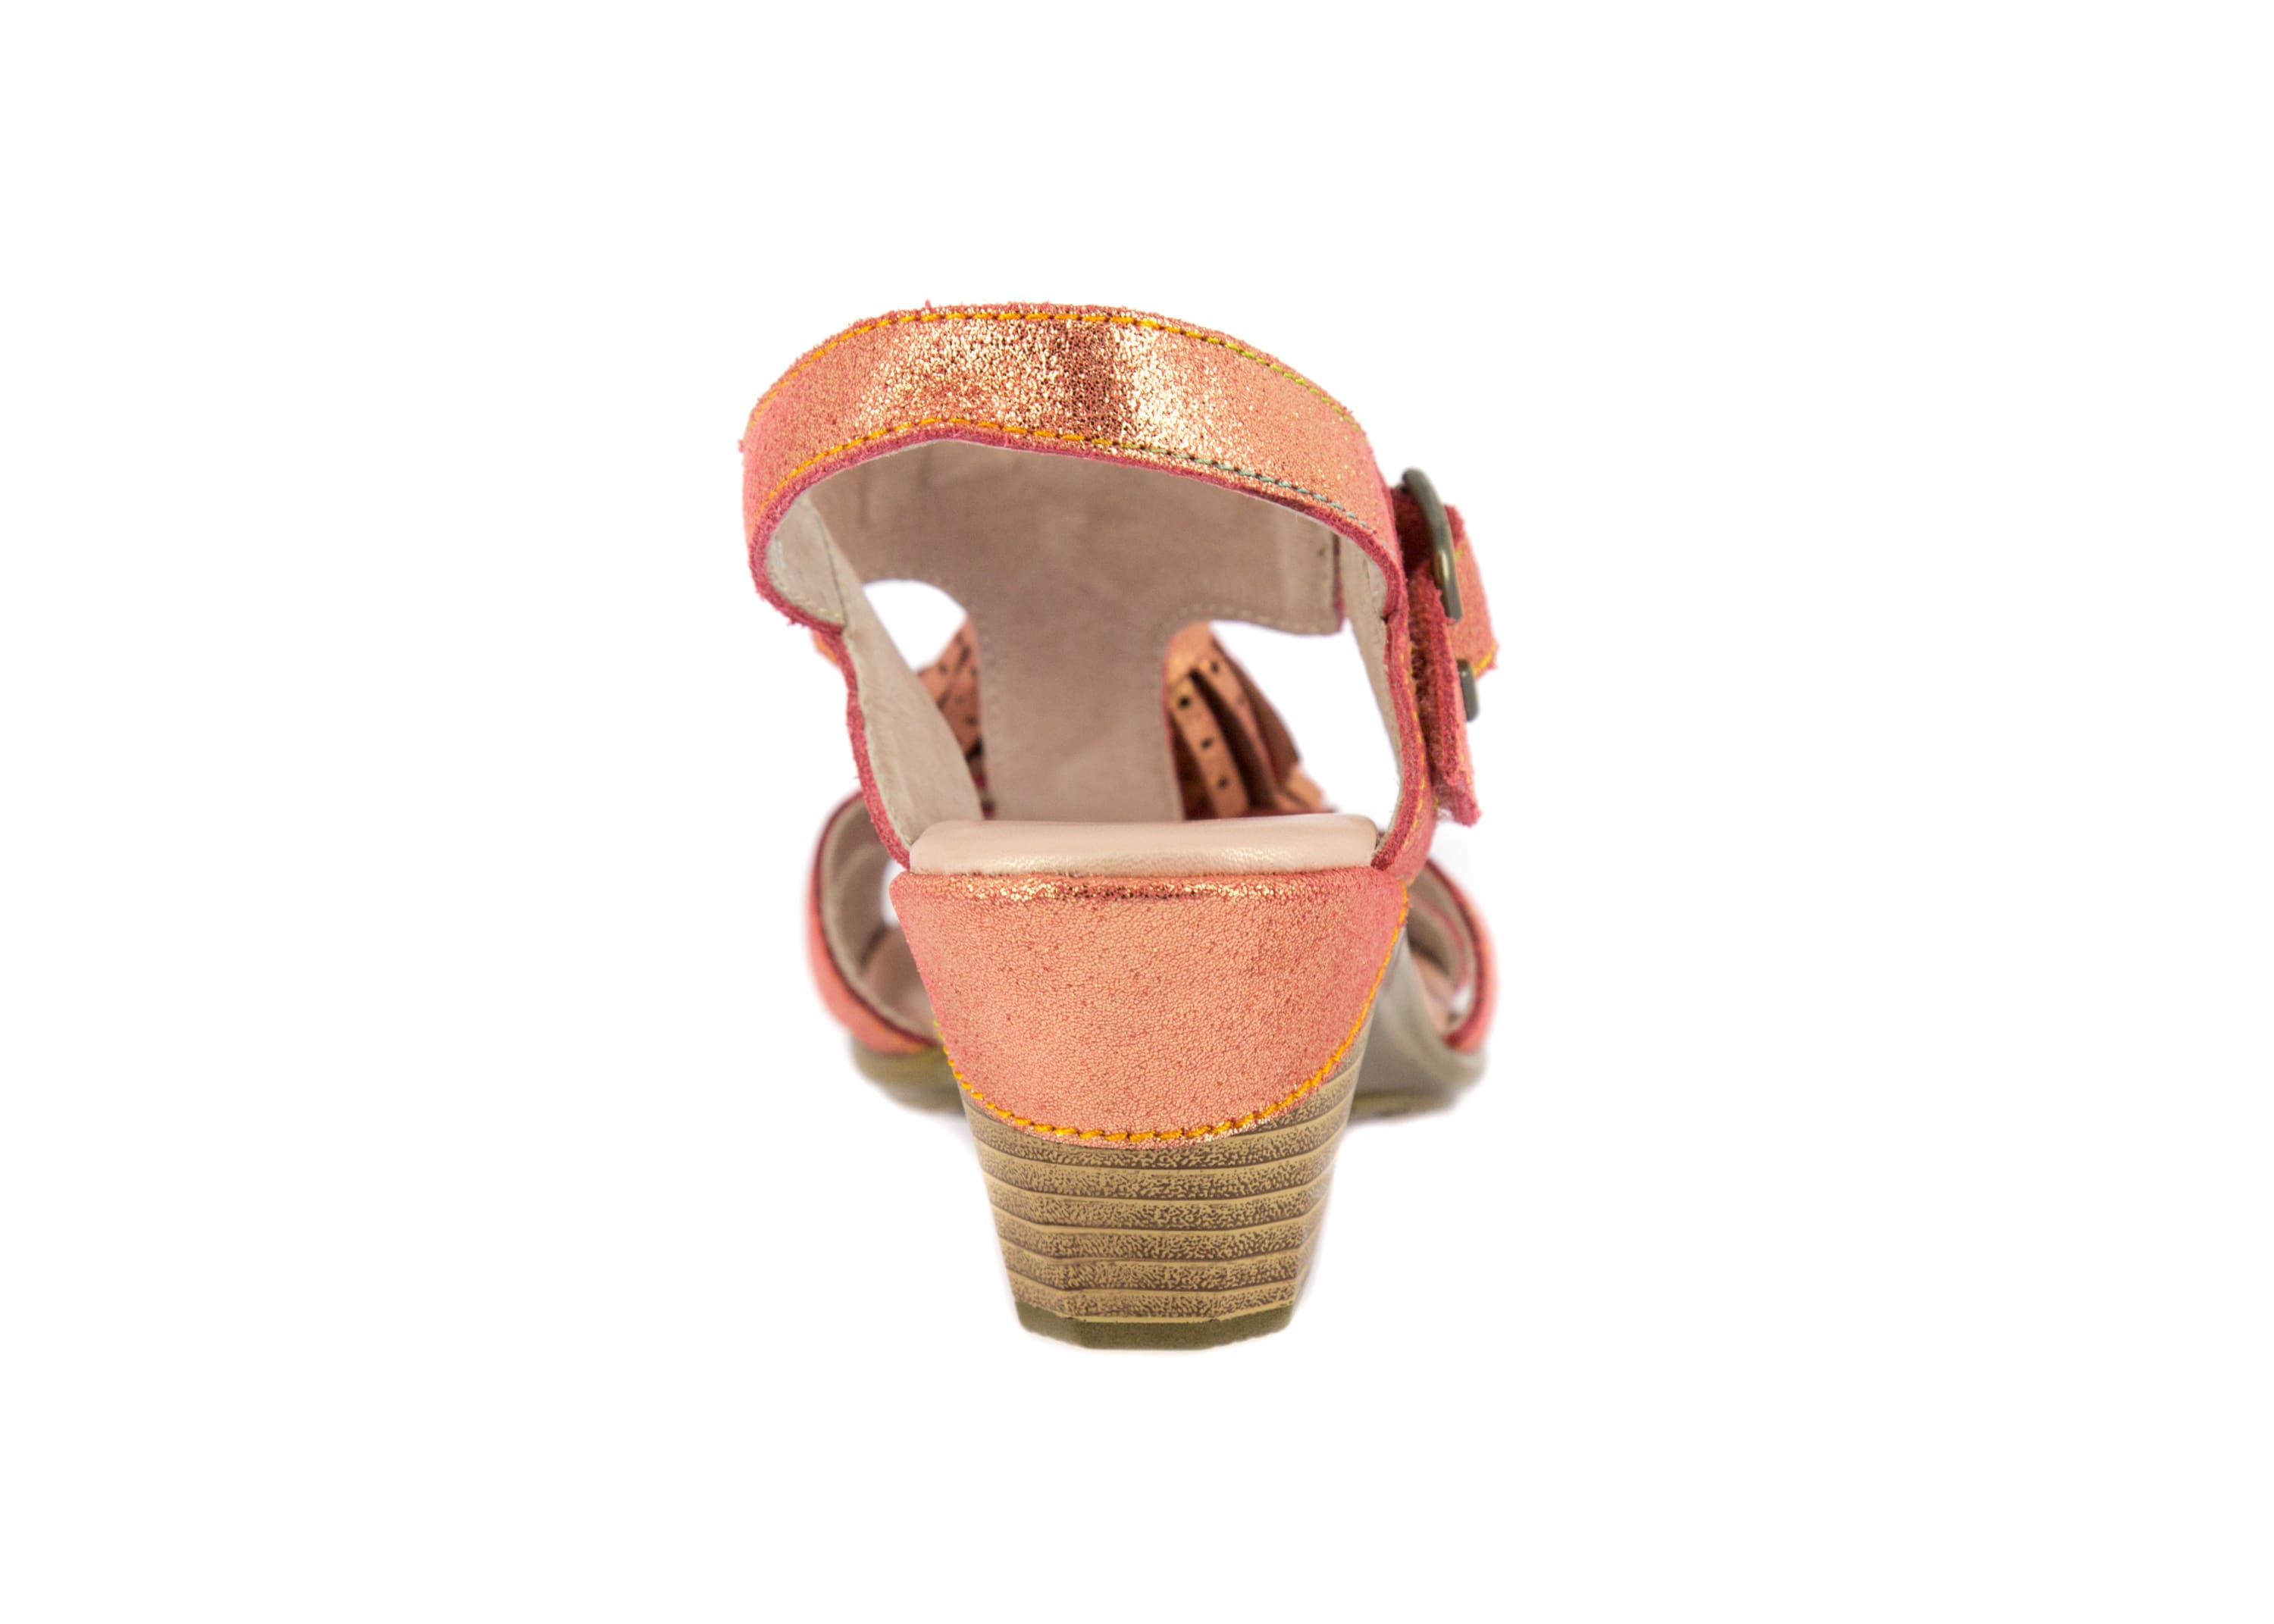 Schuh BECTTINOO33 - Sandale